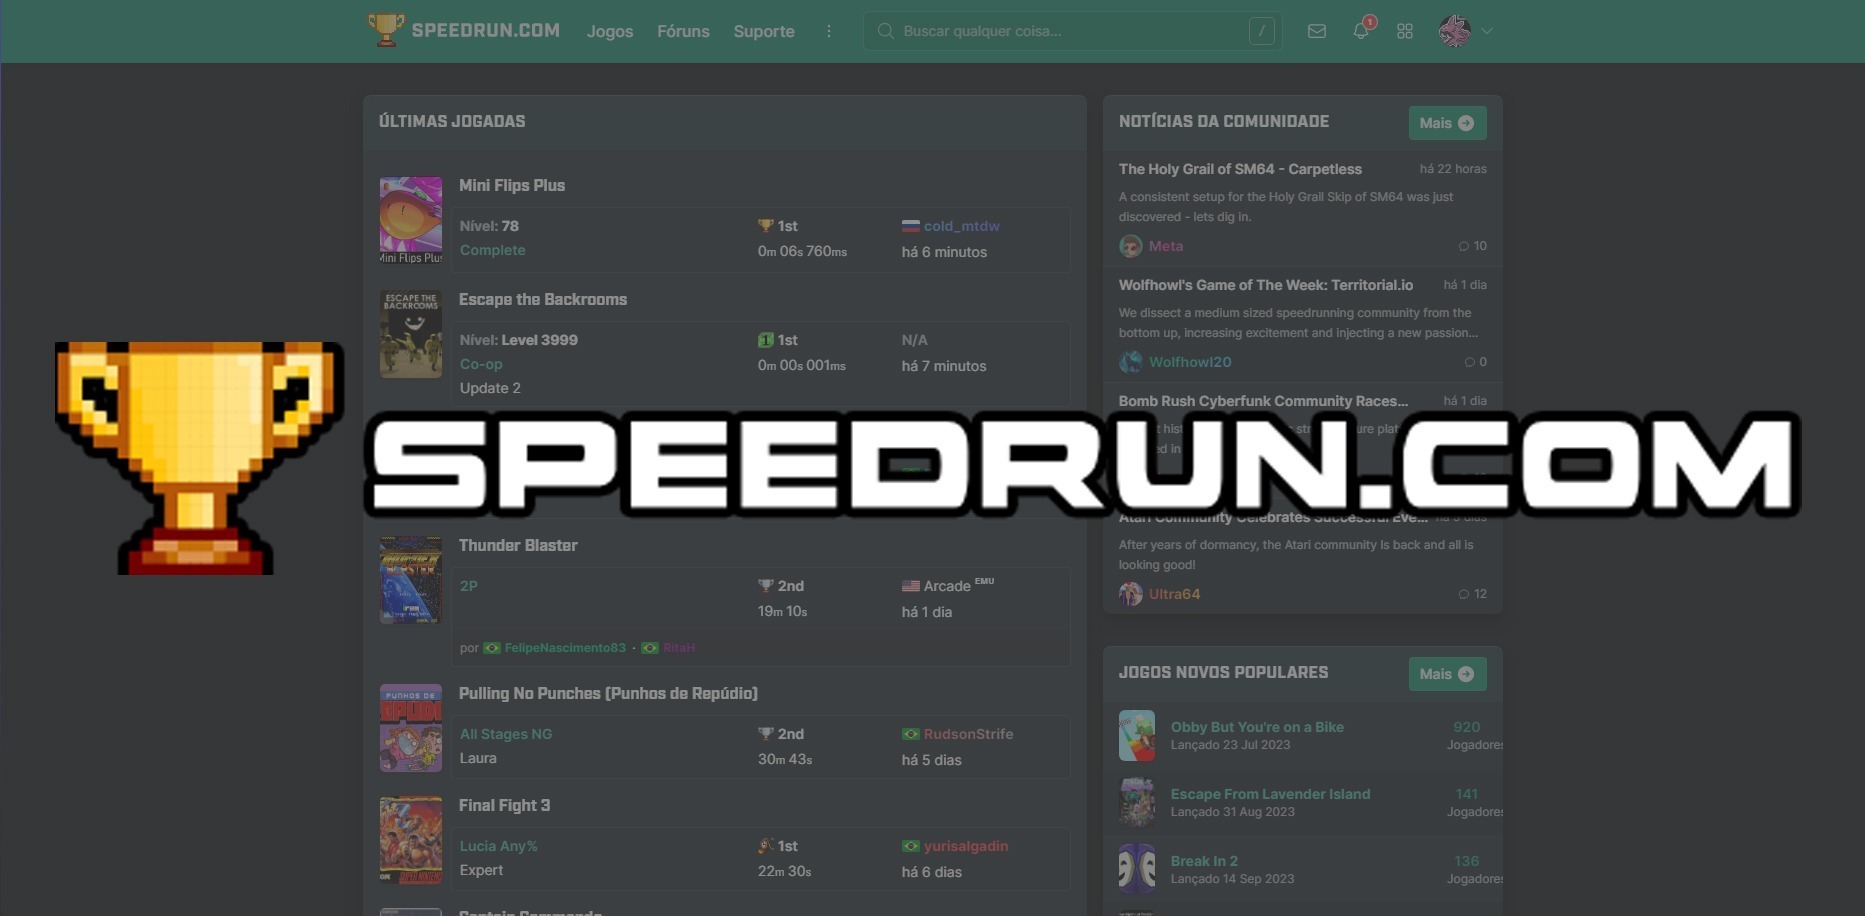 Speedrun.com